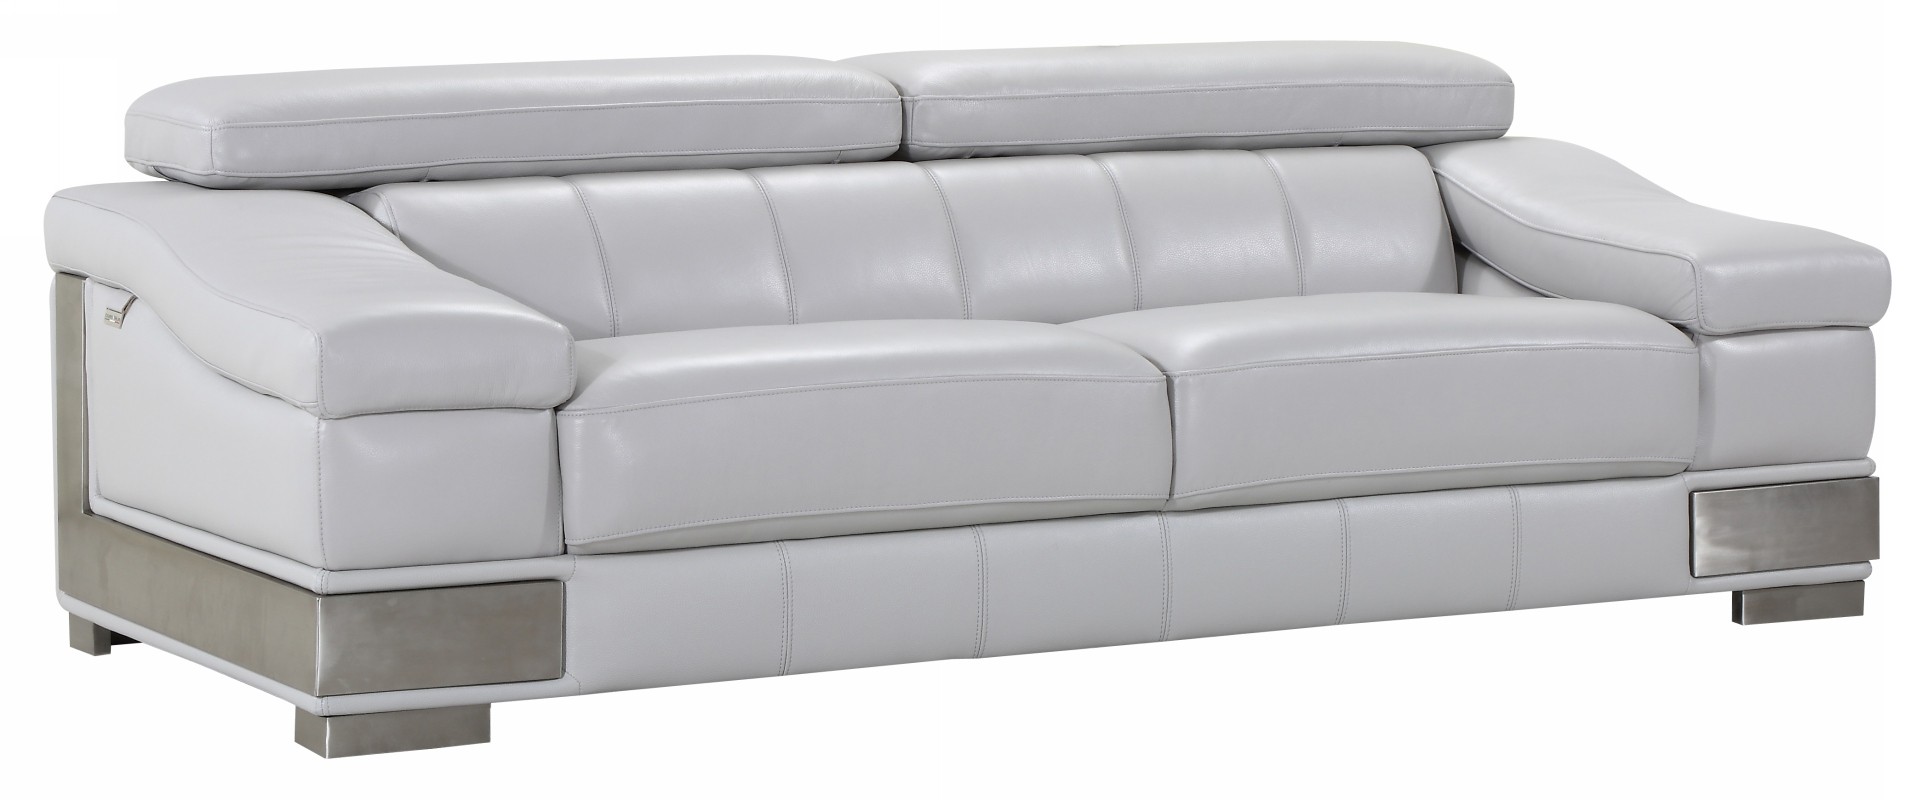 Genuine Italian Leather Sofa In Light